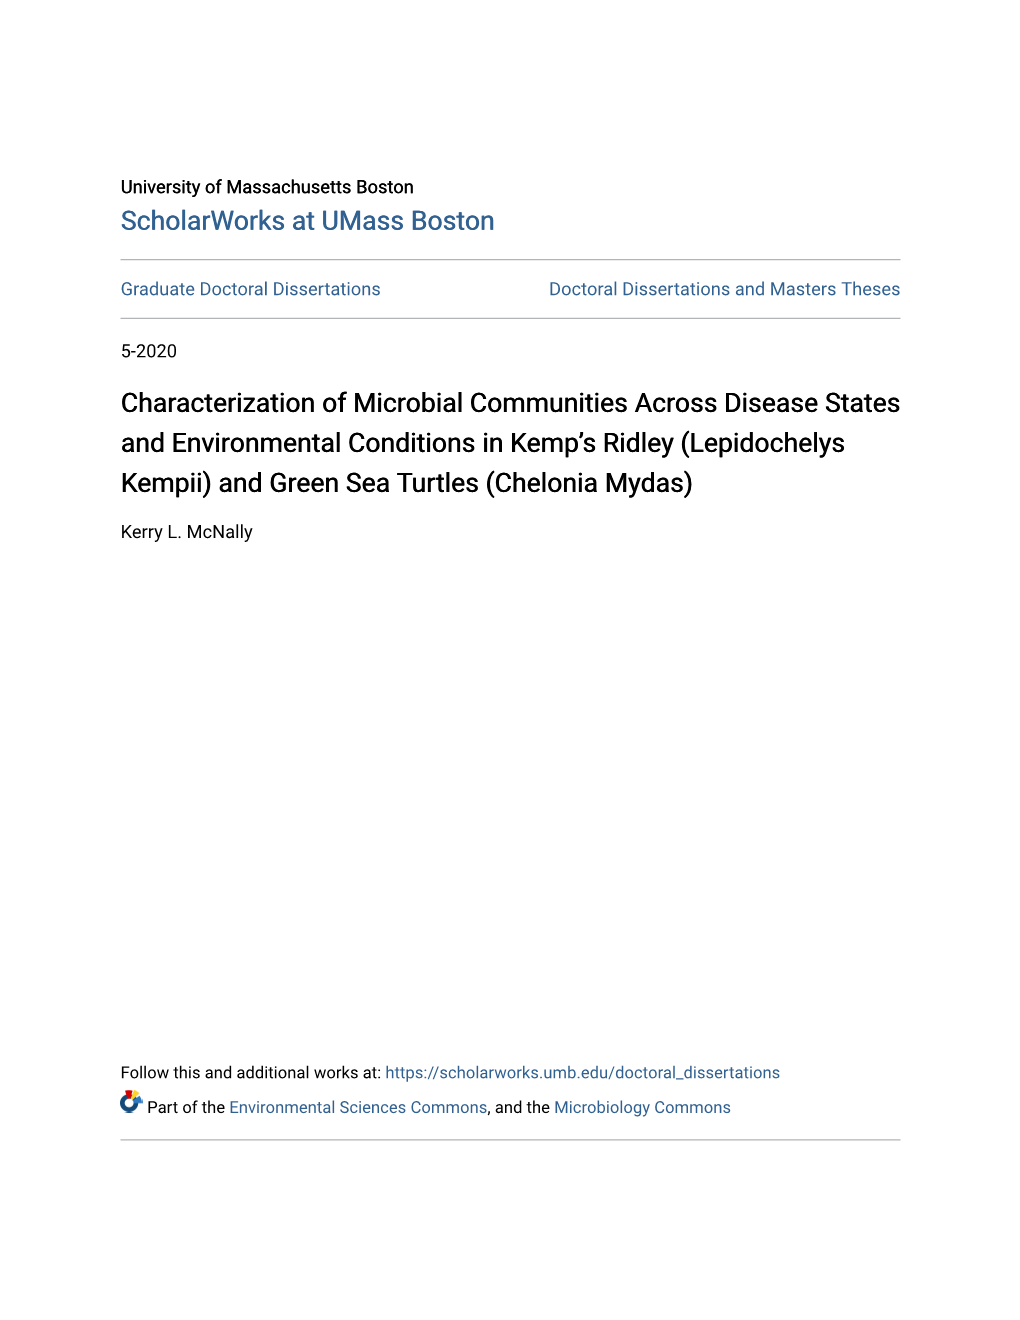 Characterization of Microbial Communities Across Disease